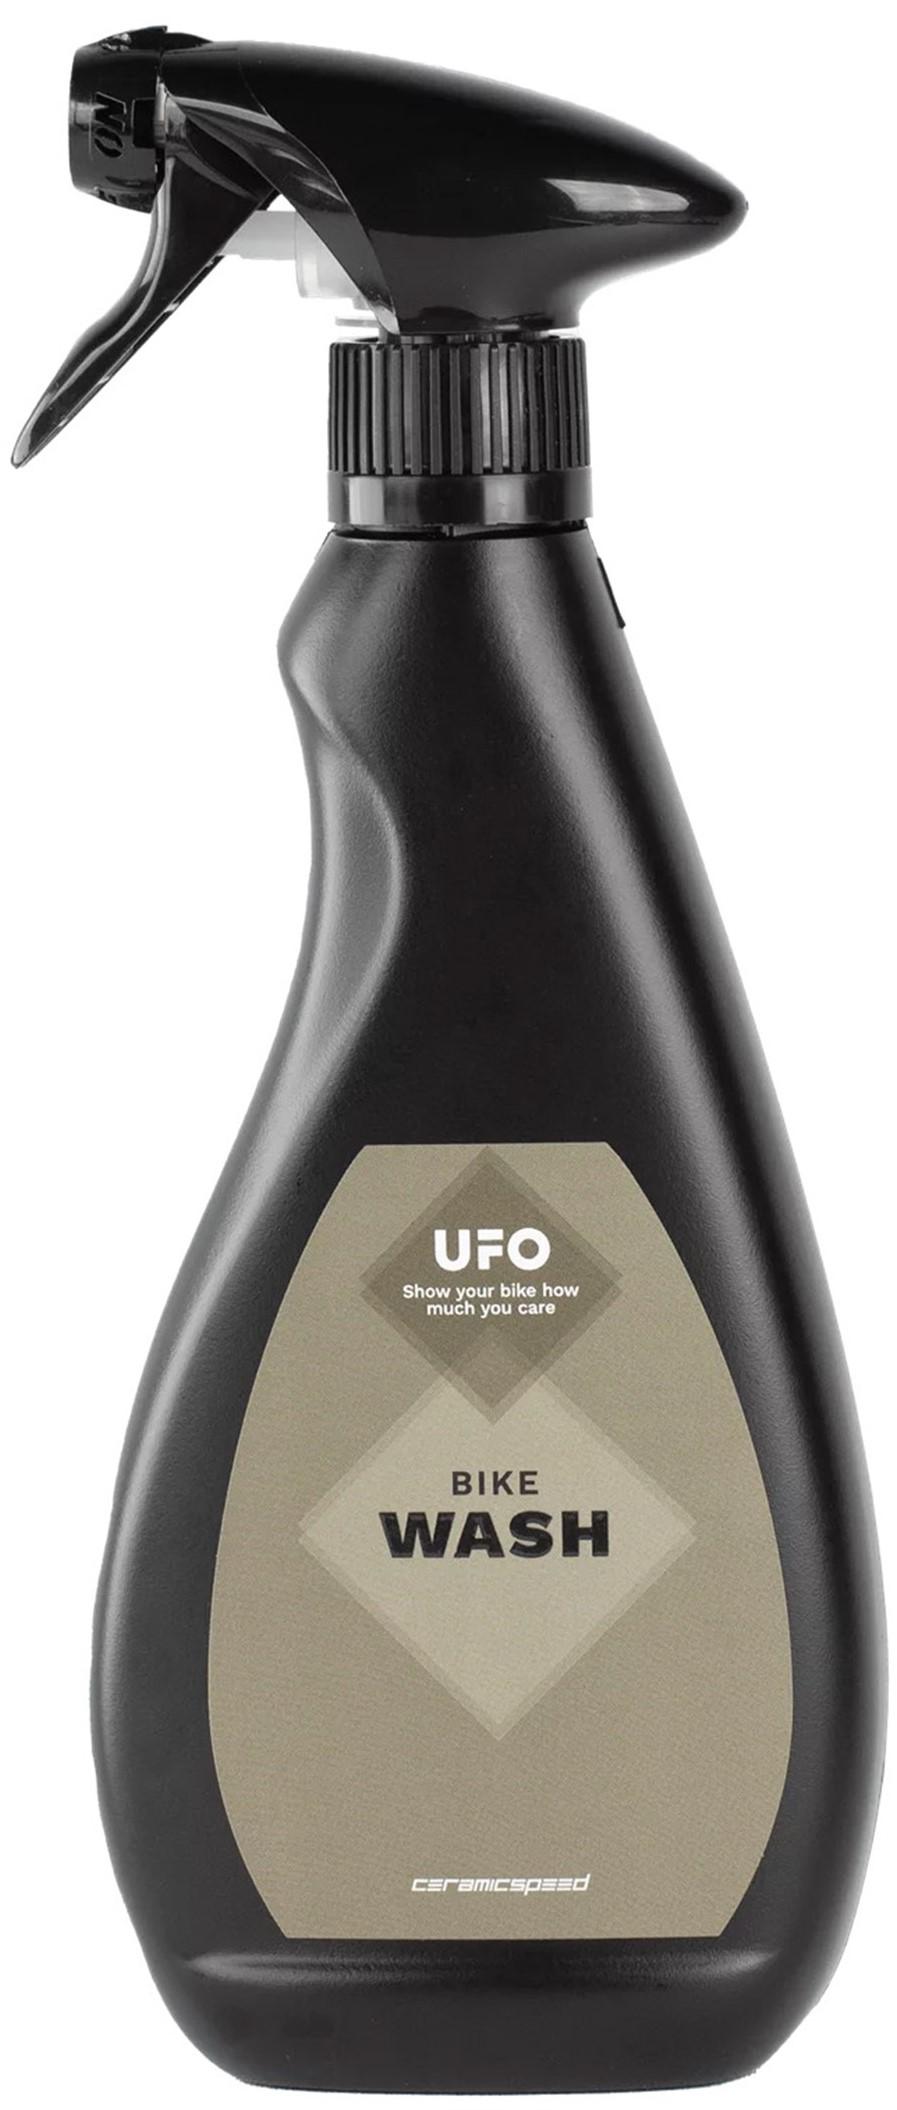 Ceramicspeed Ufo Bike Wash - Black